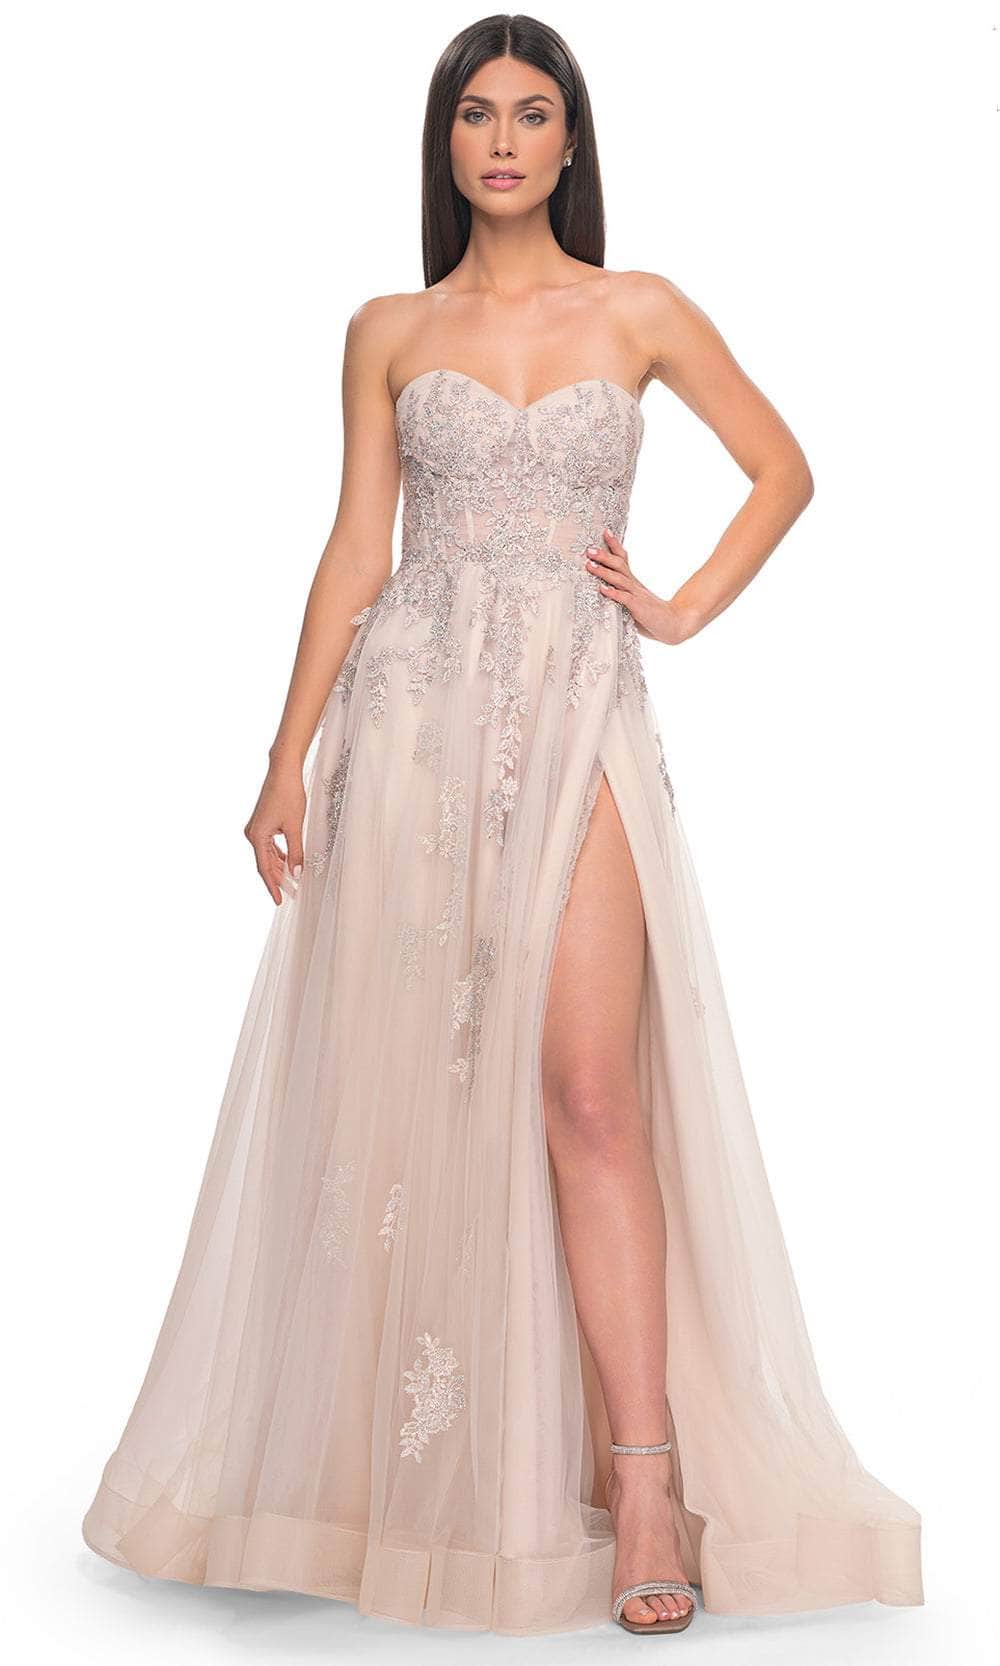 Image of La Femme 32084 - Lace Ornate Sweetheart Prom Dress